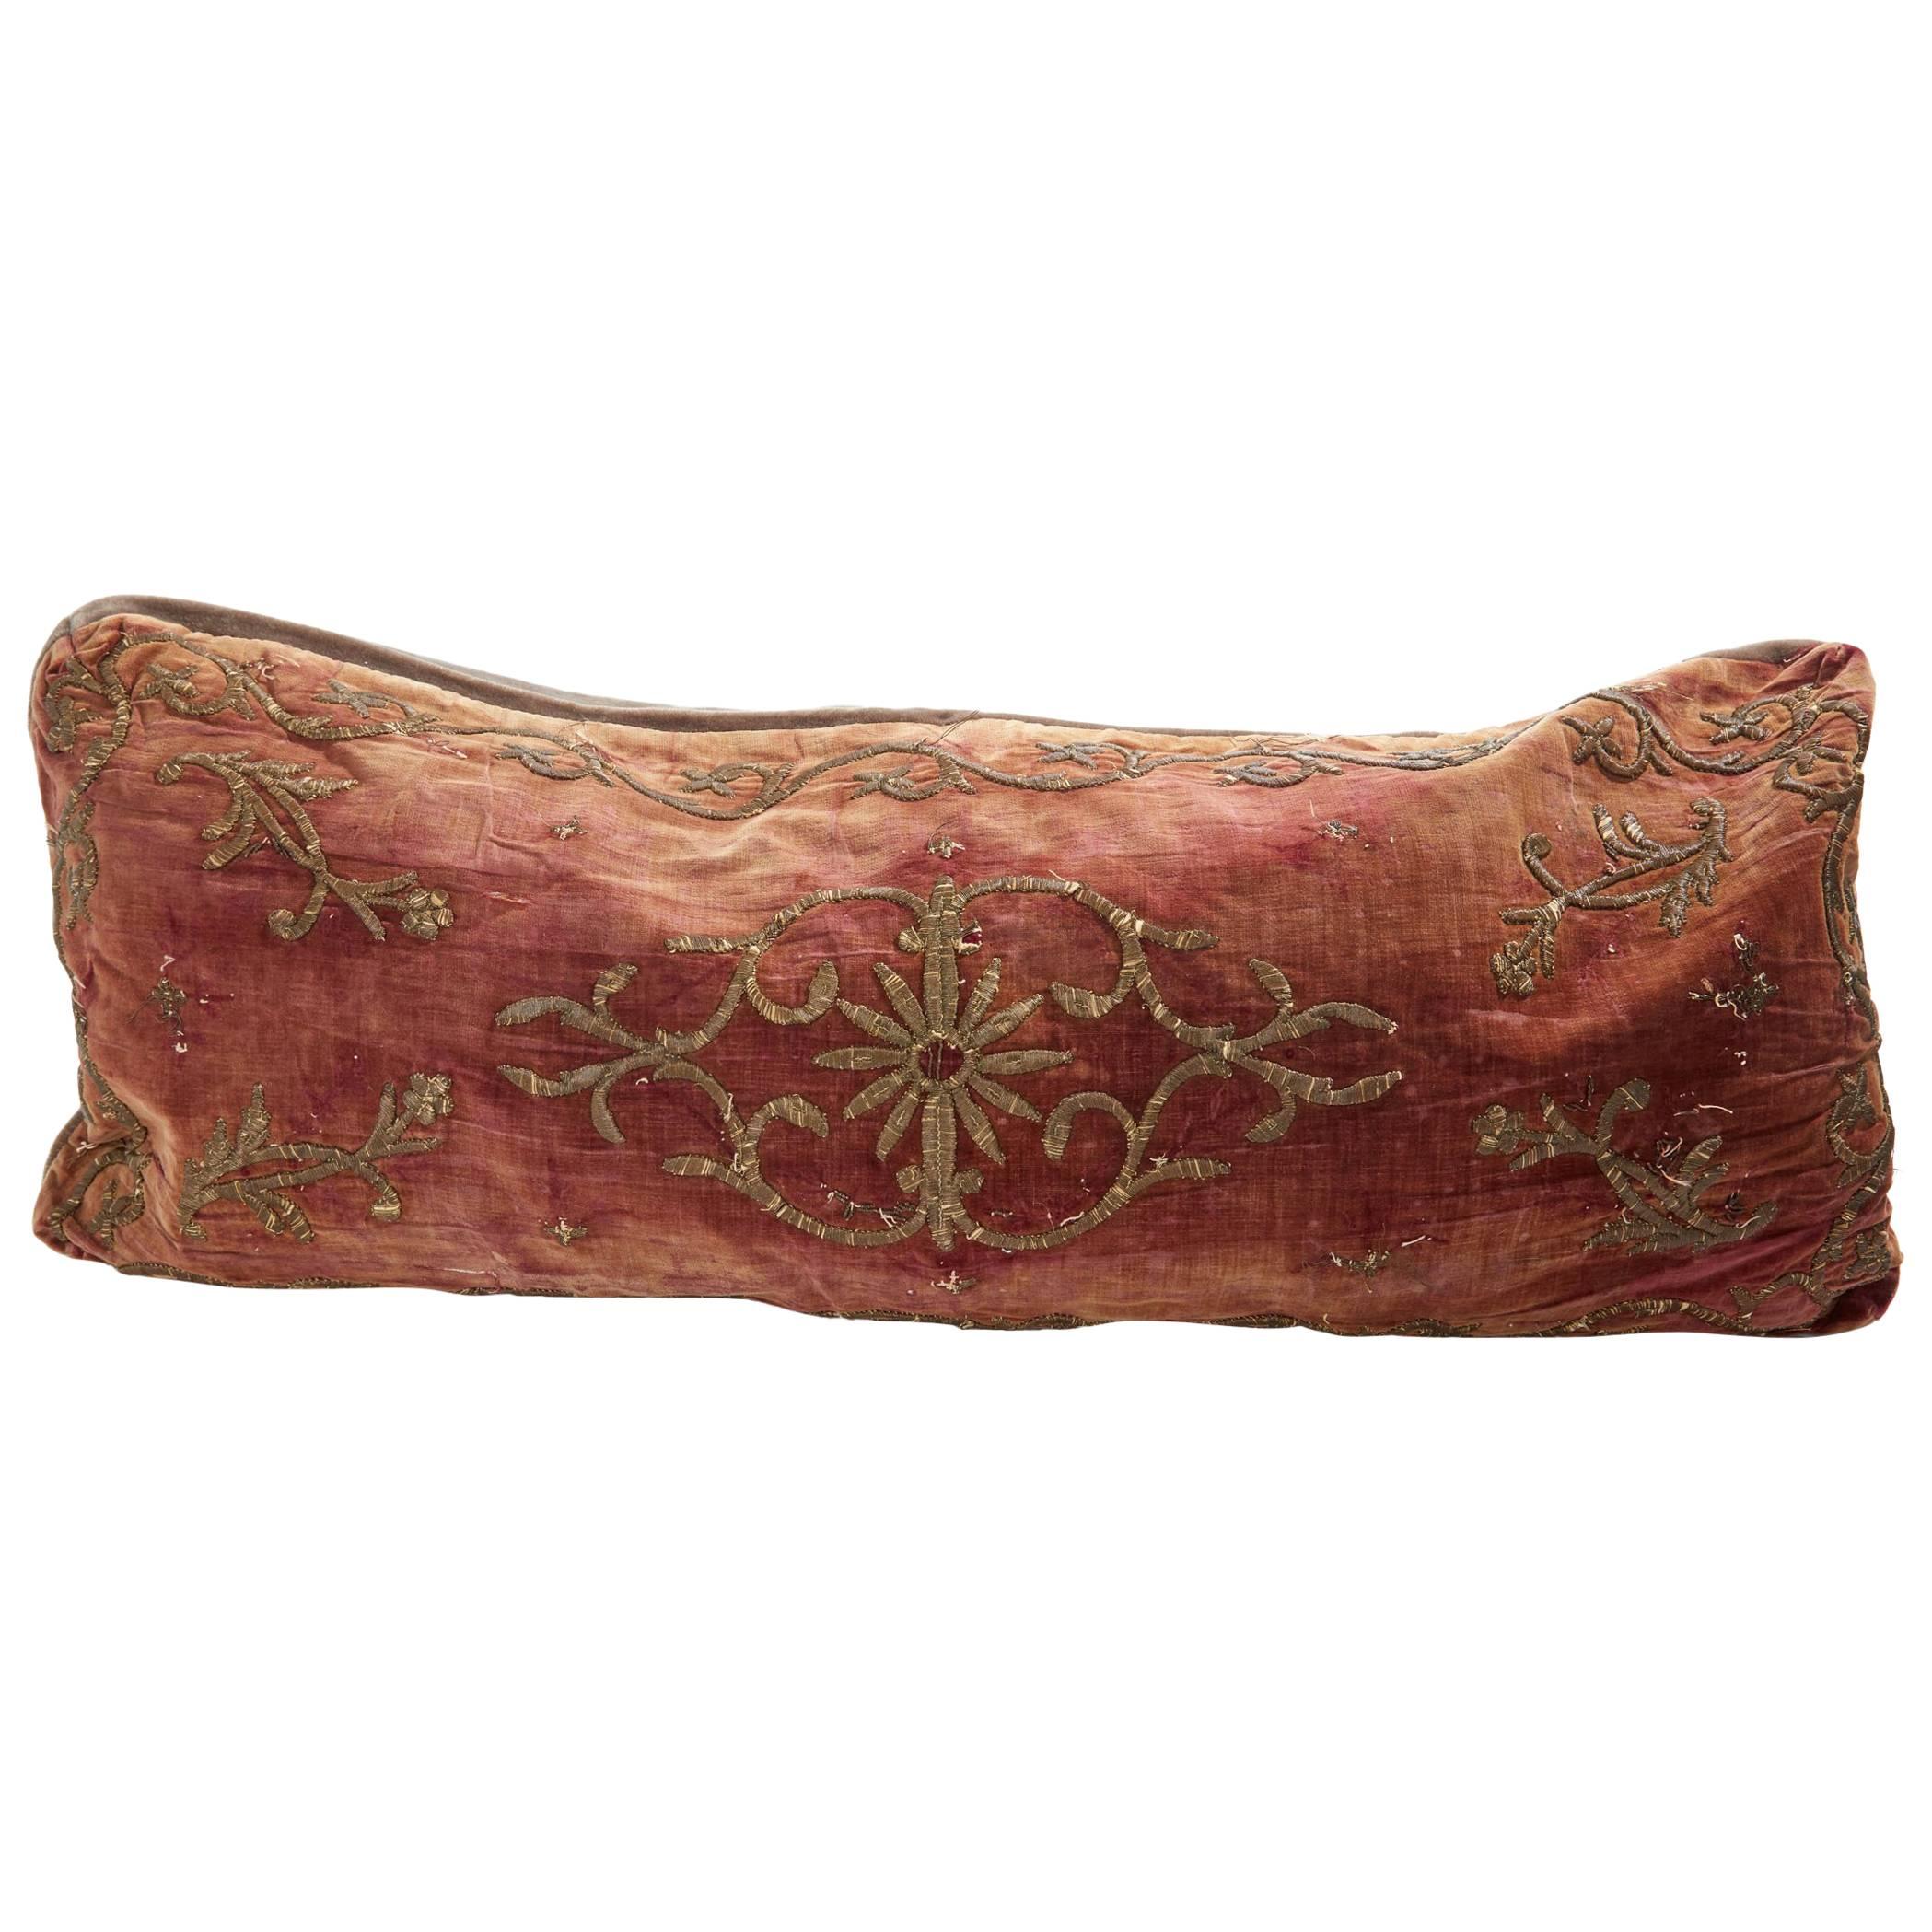 17th Century Turkish Ottoman Empire Velvet and Embroidered Pillow Sham 